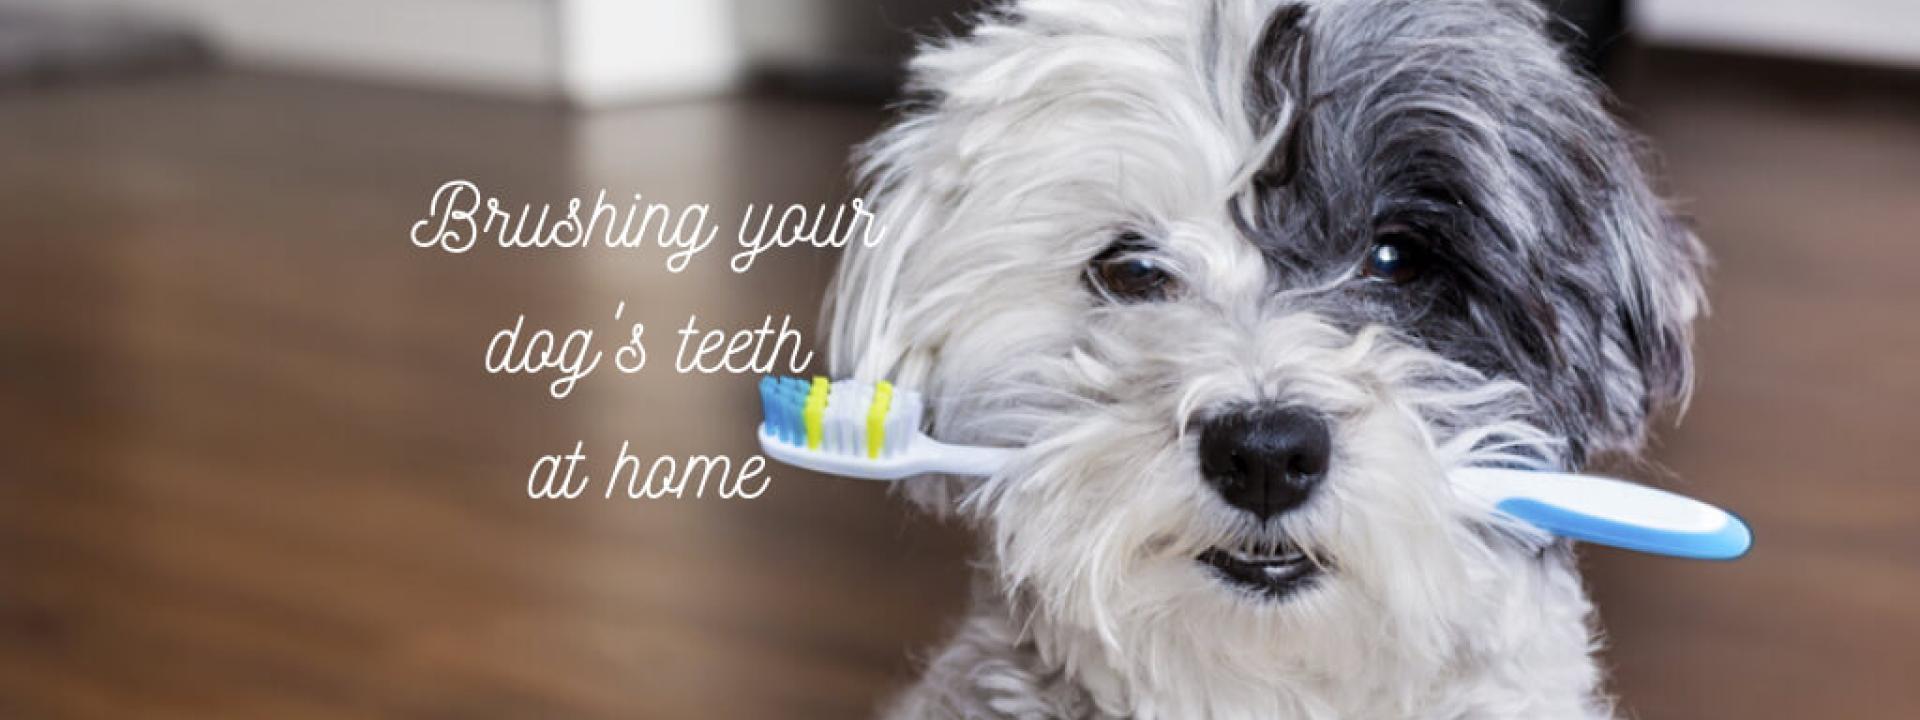 brush my dog's teeth at home